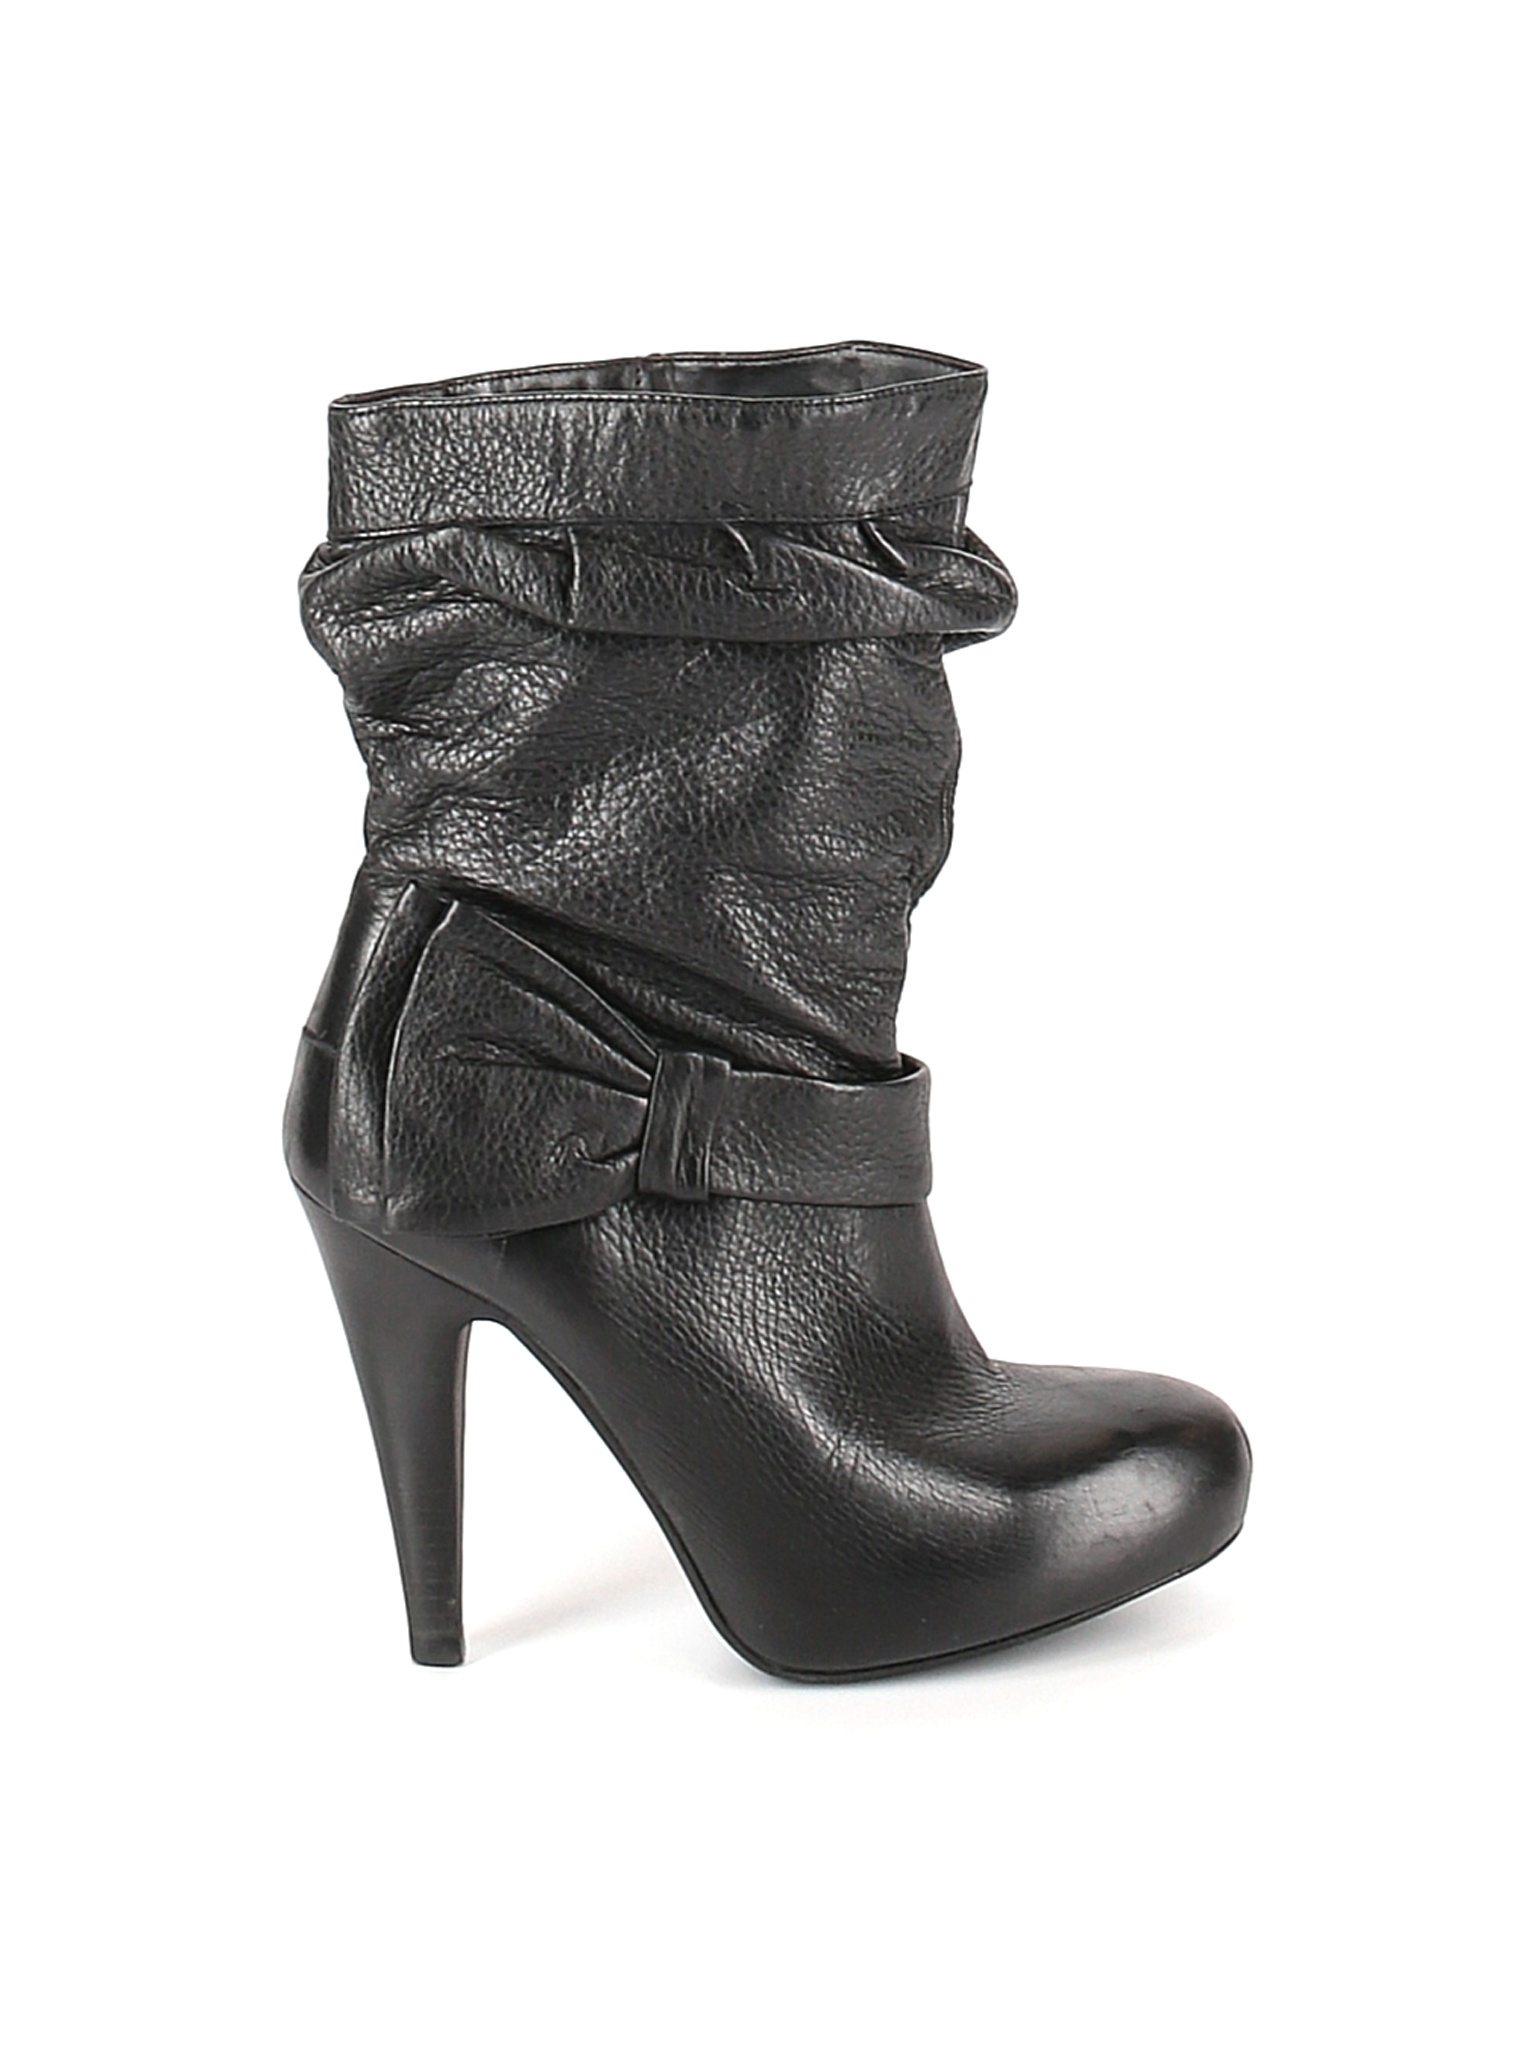 Gianni Bini Women Black Boots US 7 | eBay